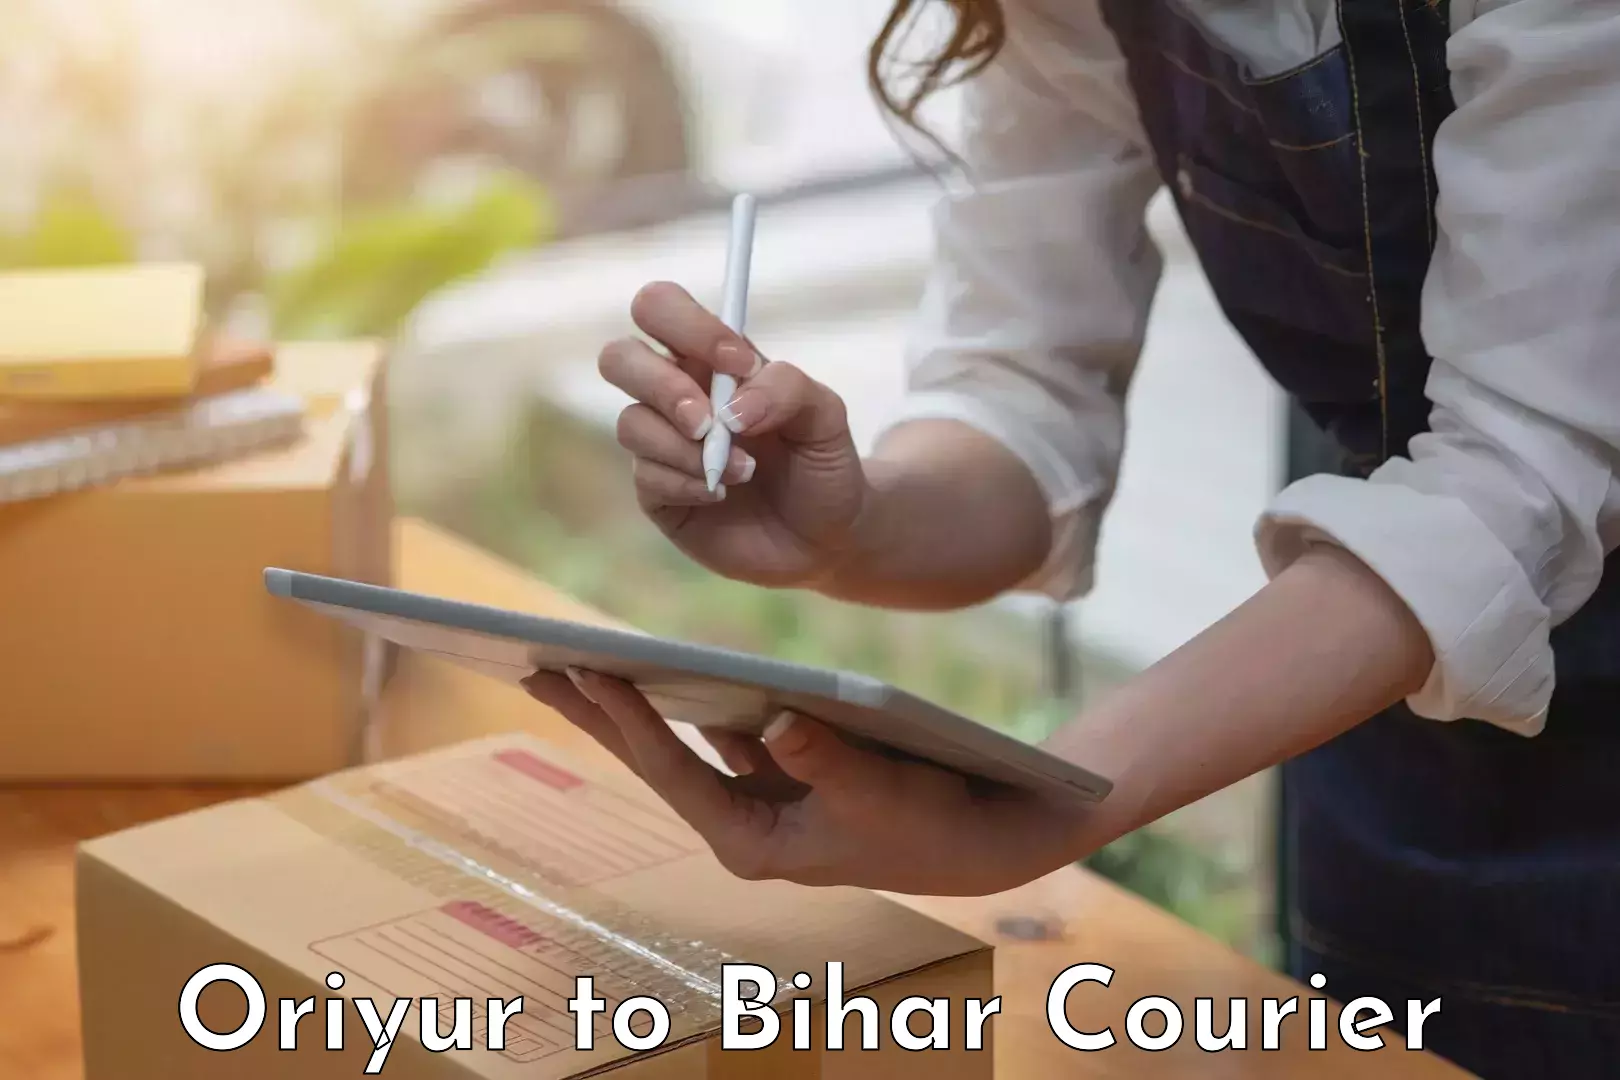 Budget-friendly movers Oriyur to Bhorey